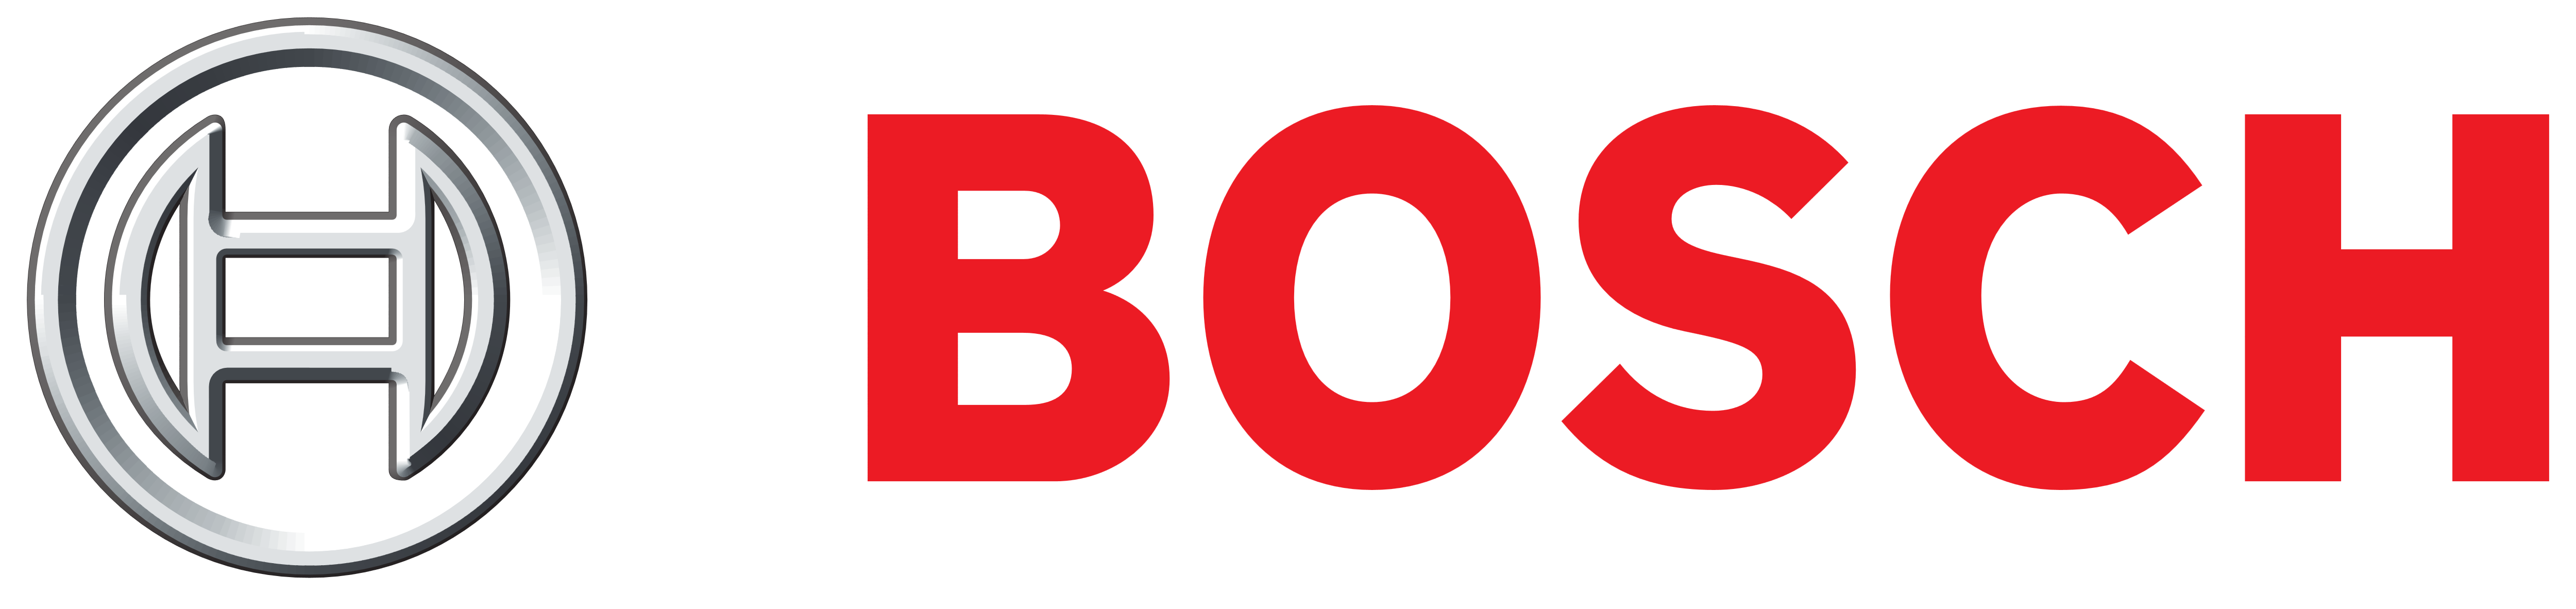 Bosch : Brand Short Description Type Here.